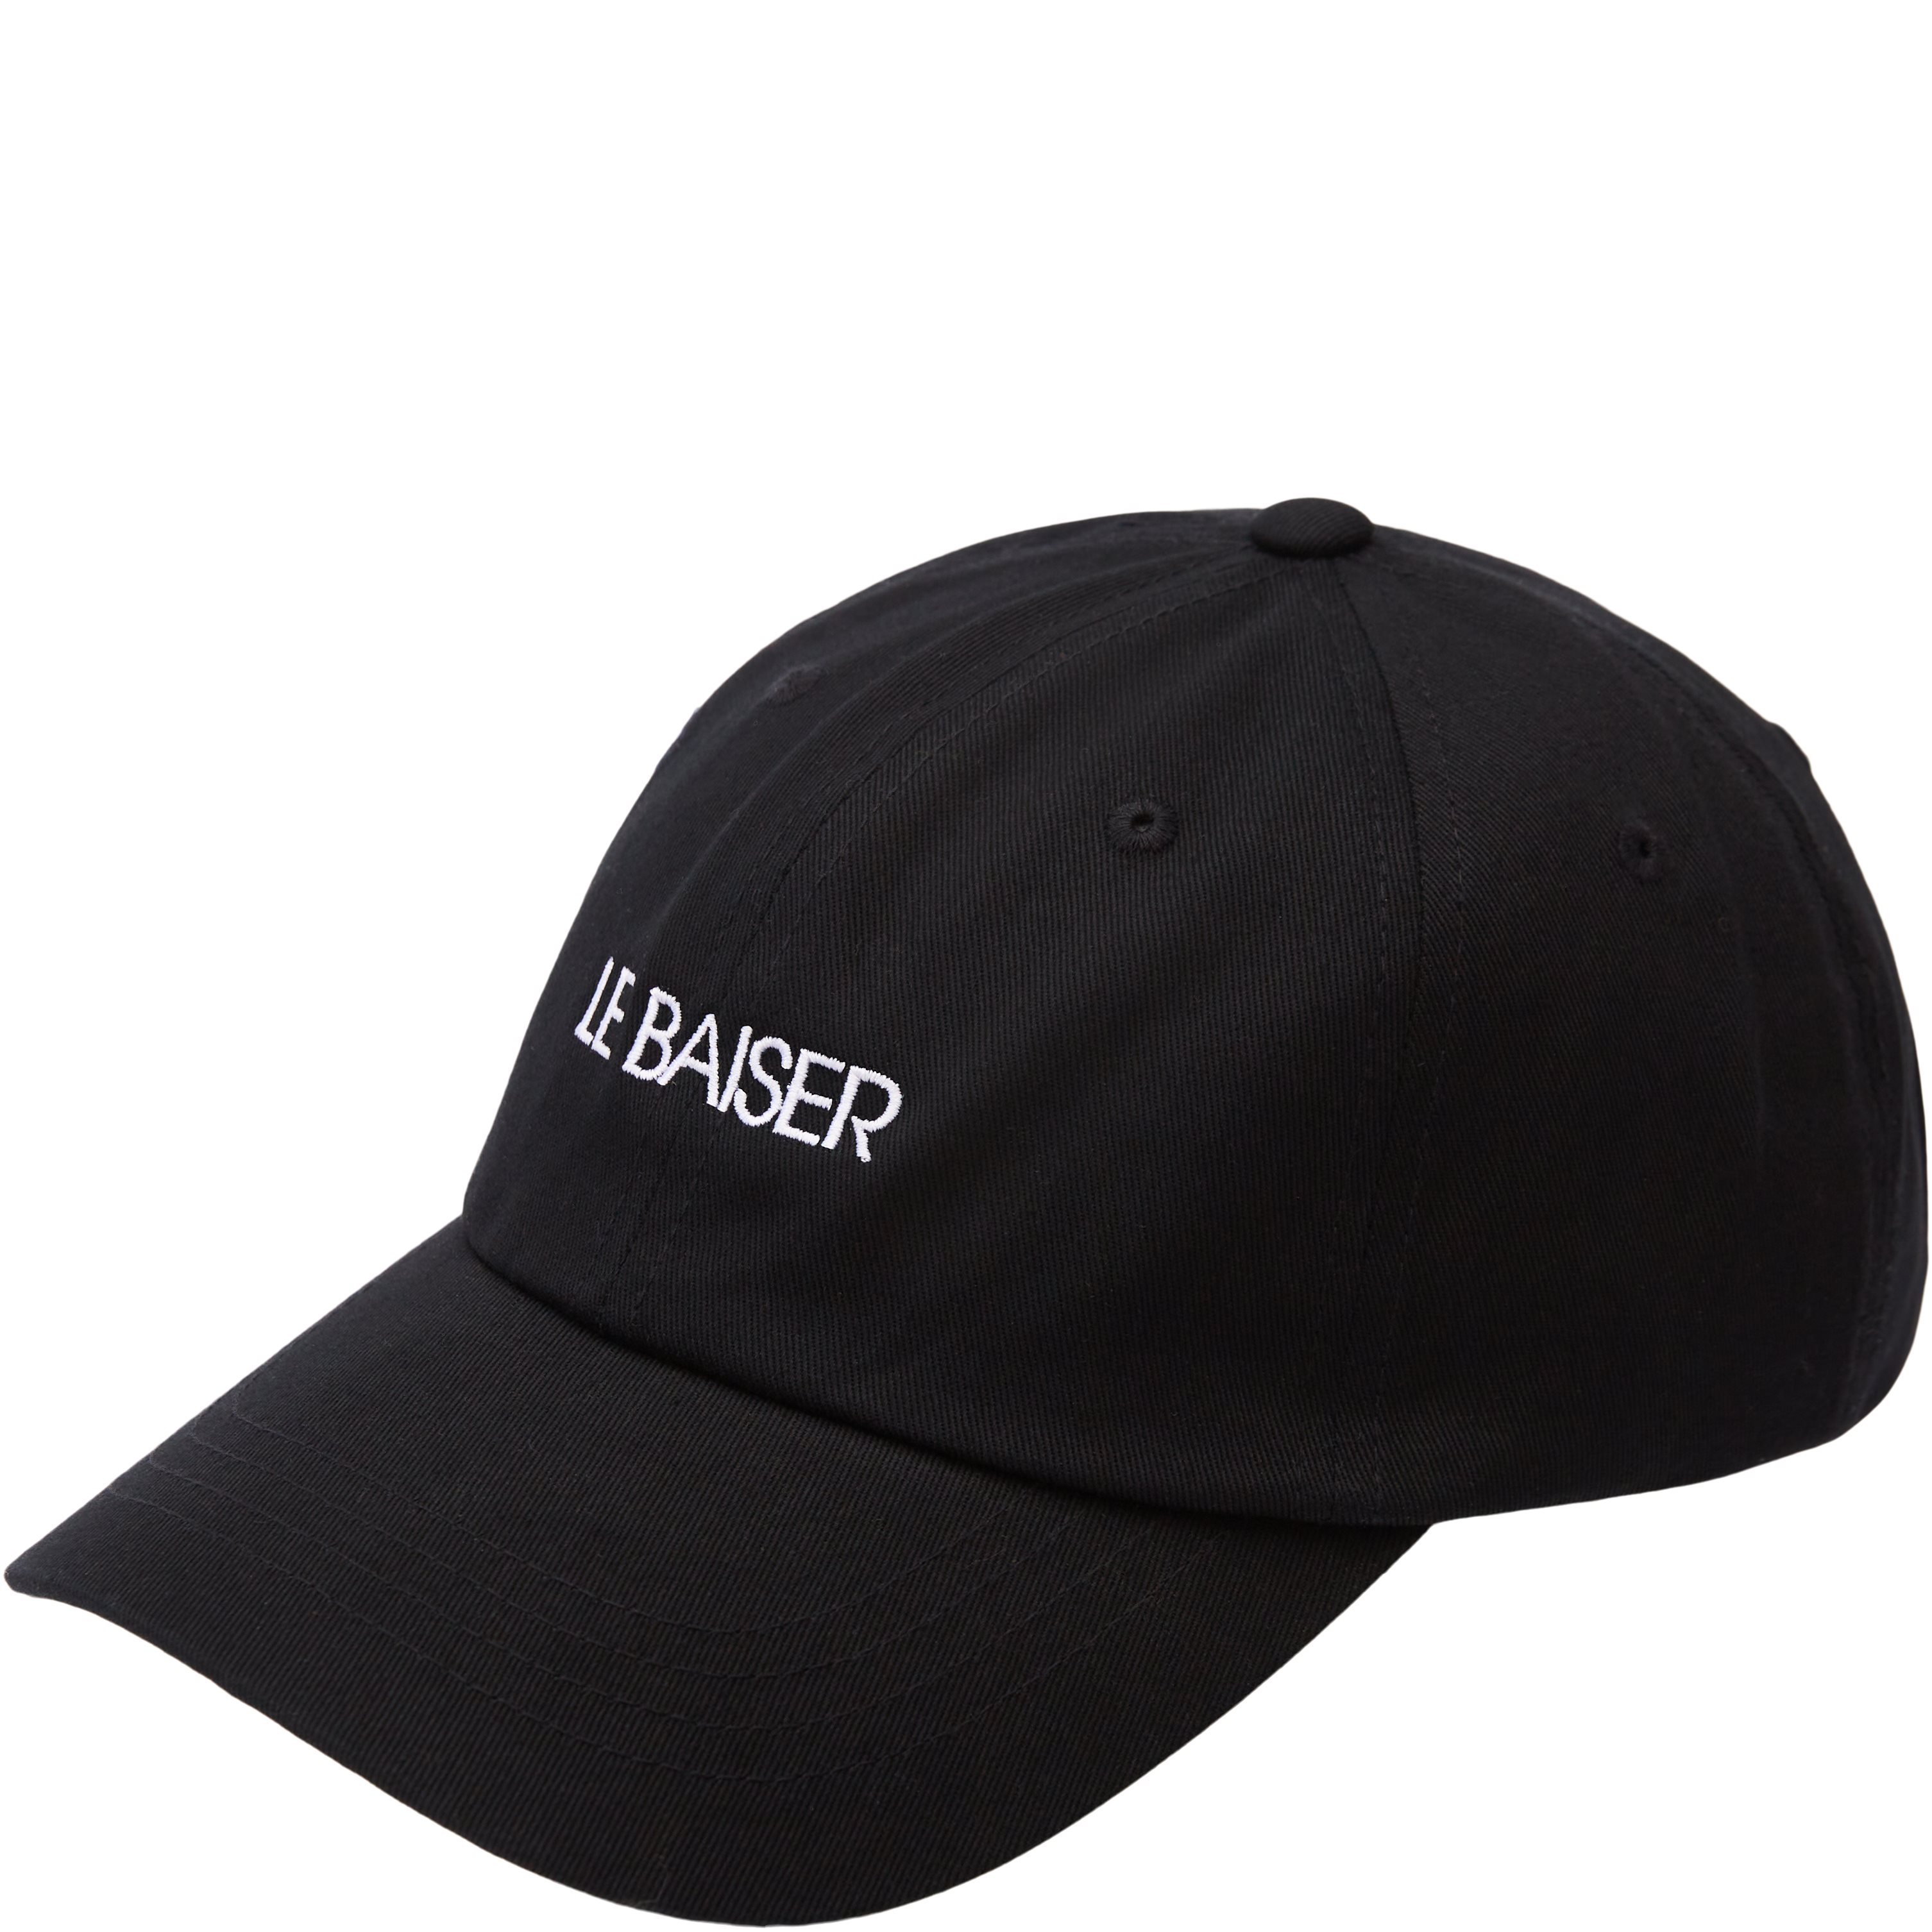 Le Baiser Caps BASEBALL CAP Black